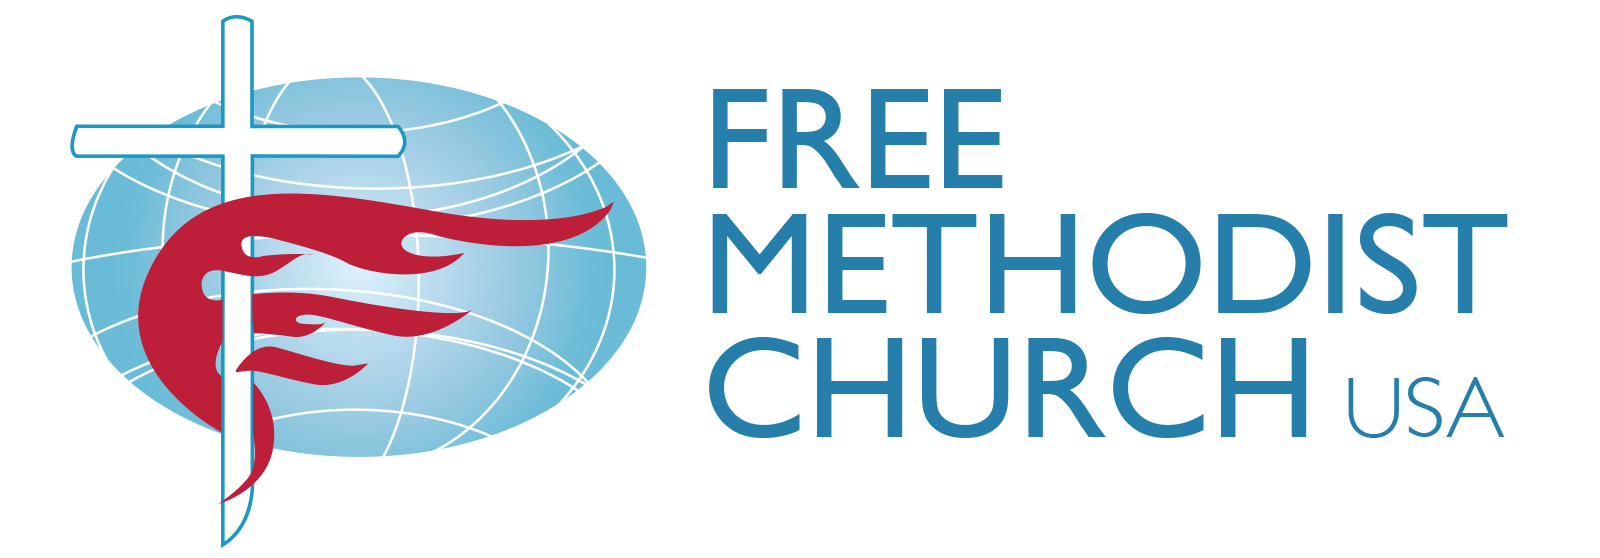 Free Methodist? Free Methodist Church, USA New South Conferencea